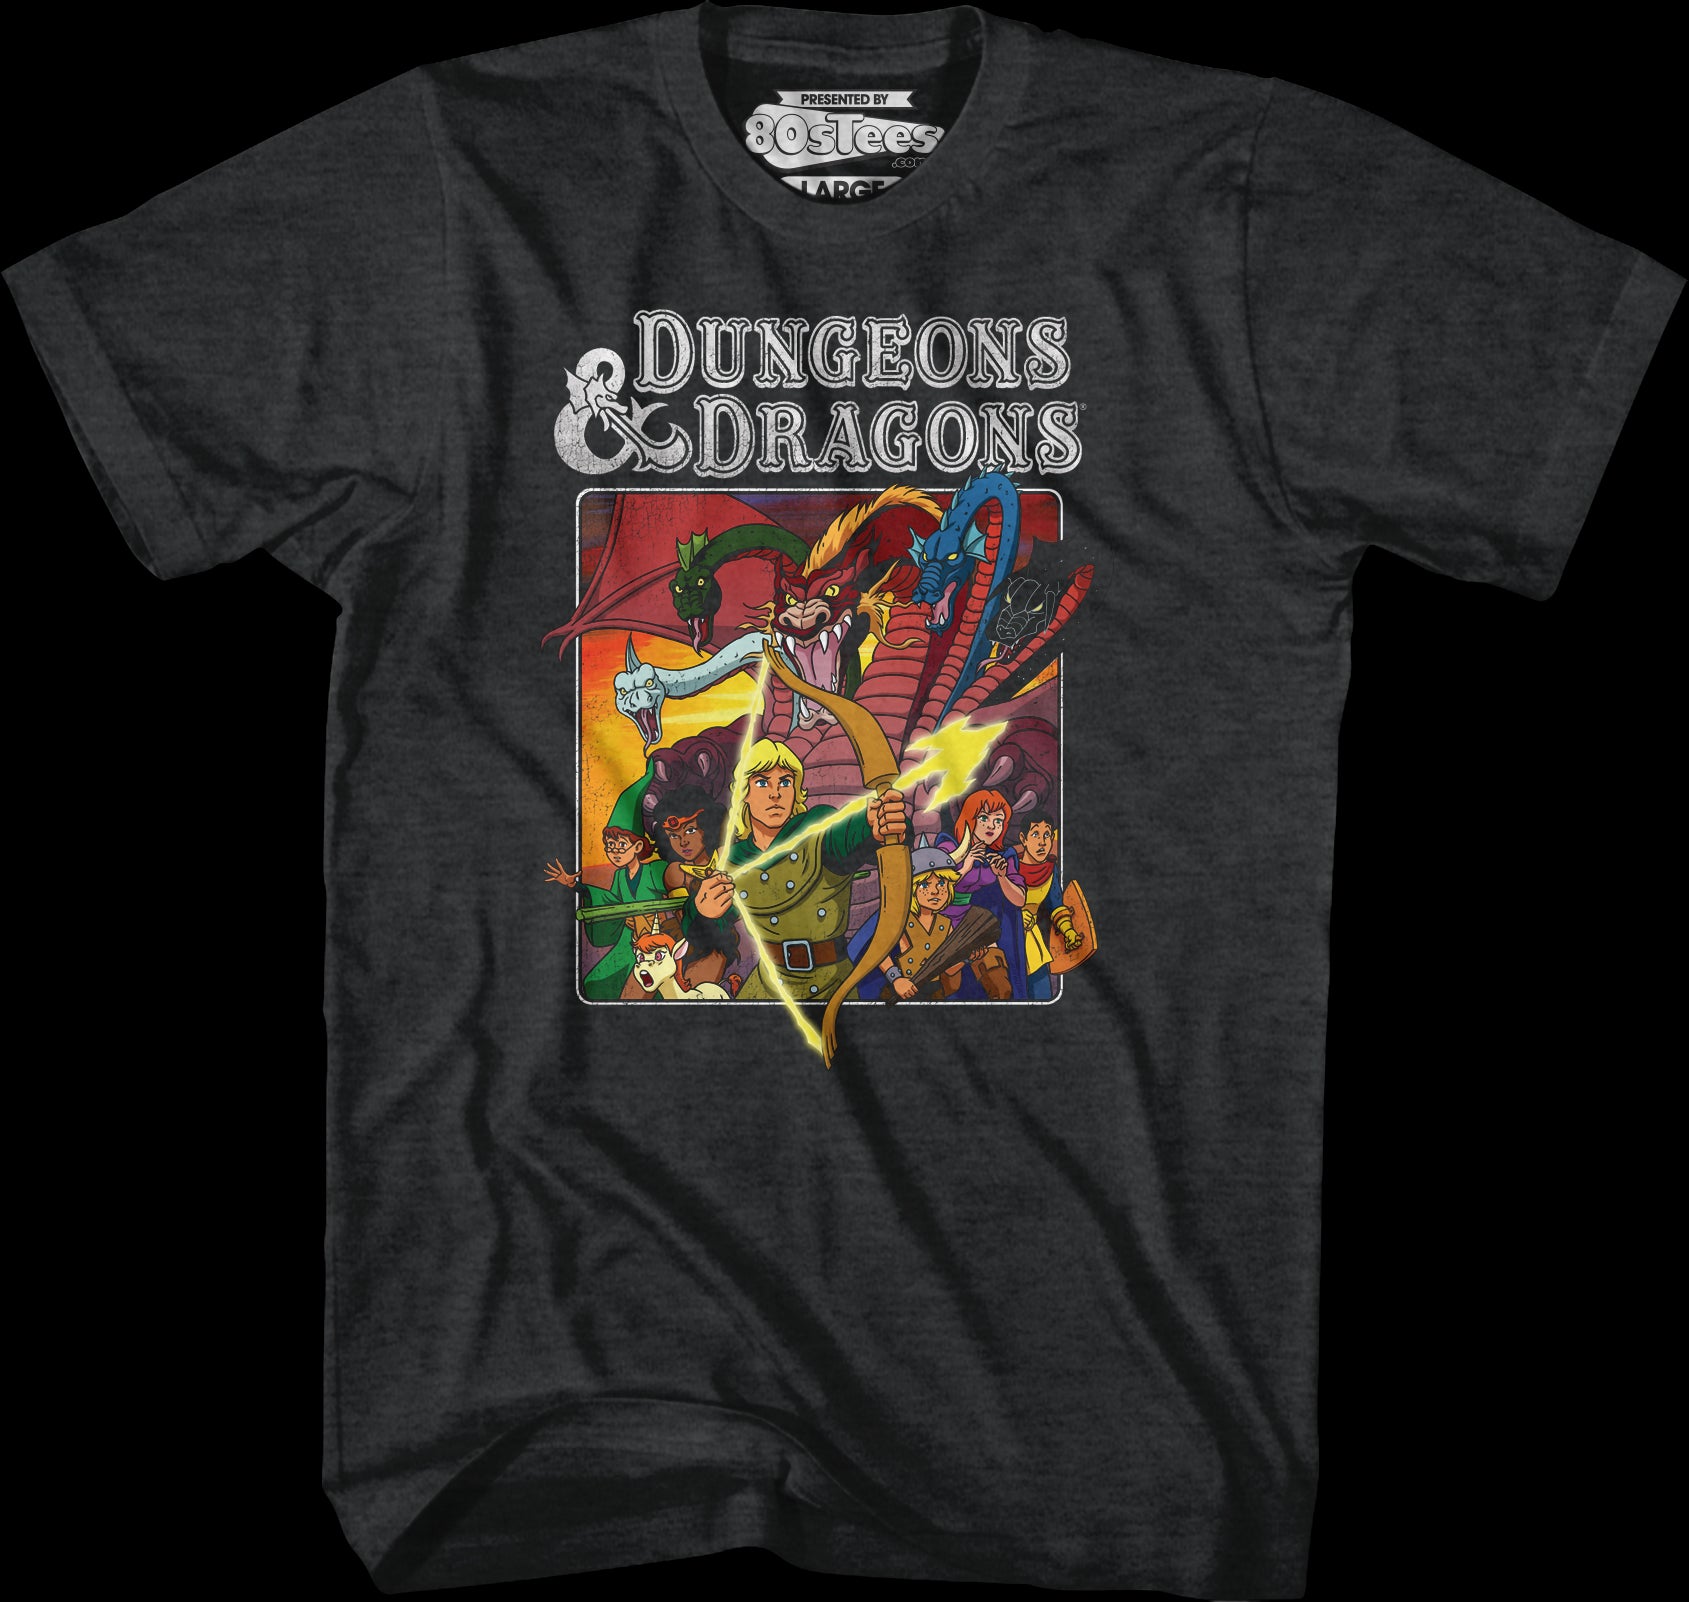 T-Shirt Cartoon Characters & Dungeons Dragons